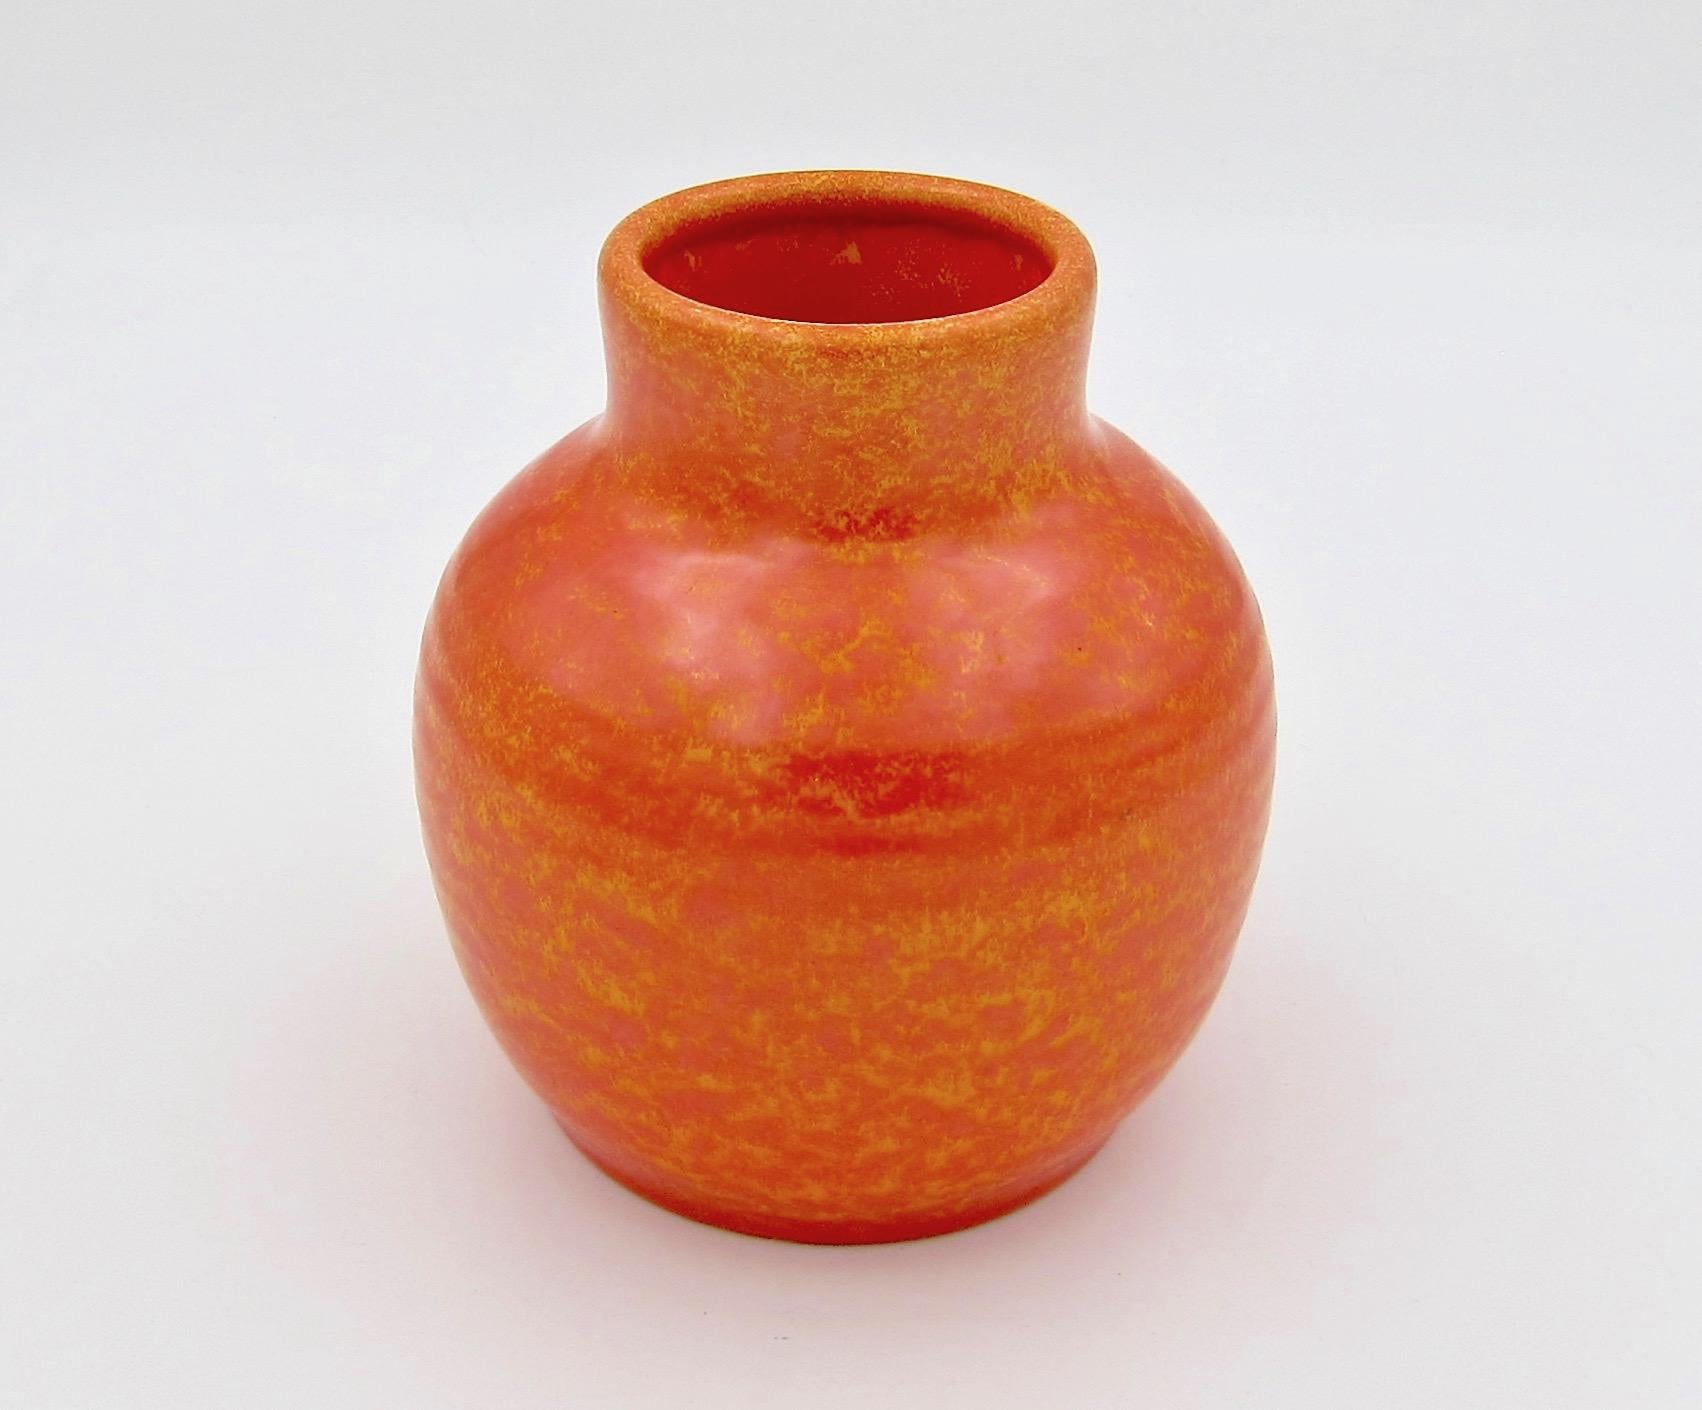 20th Century Art Deco Royal Lancastrian Vase with an Orange Vermillion Glaze, Signed